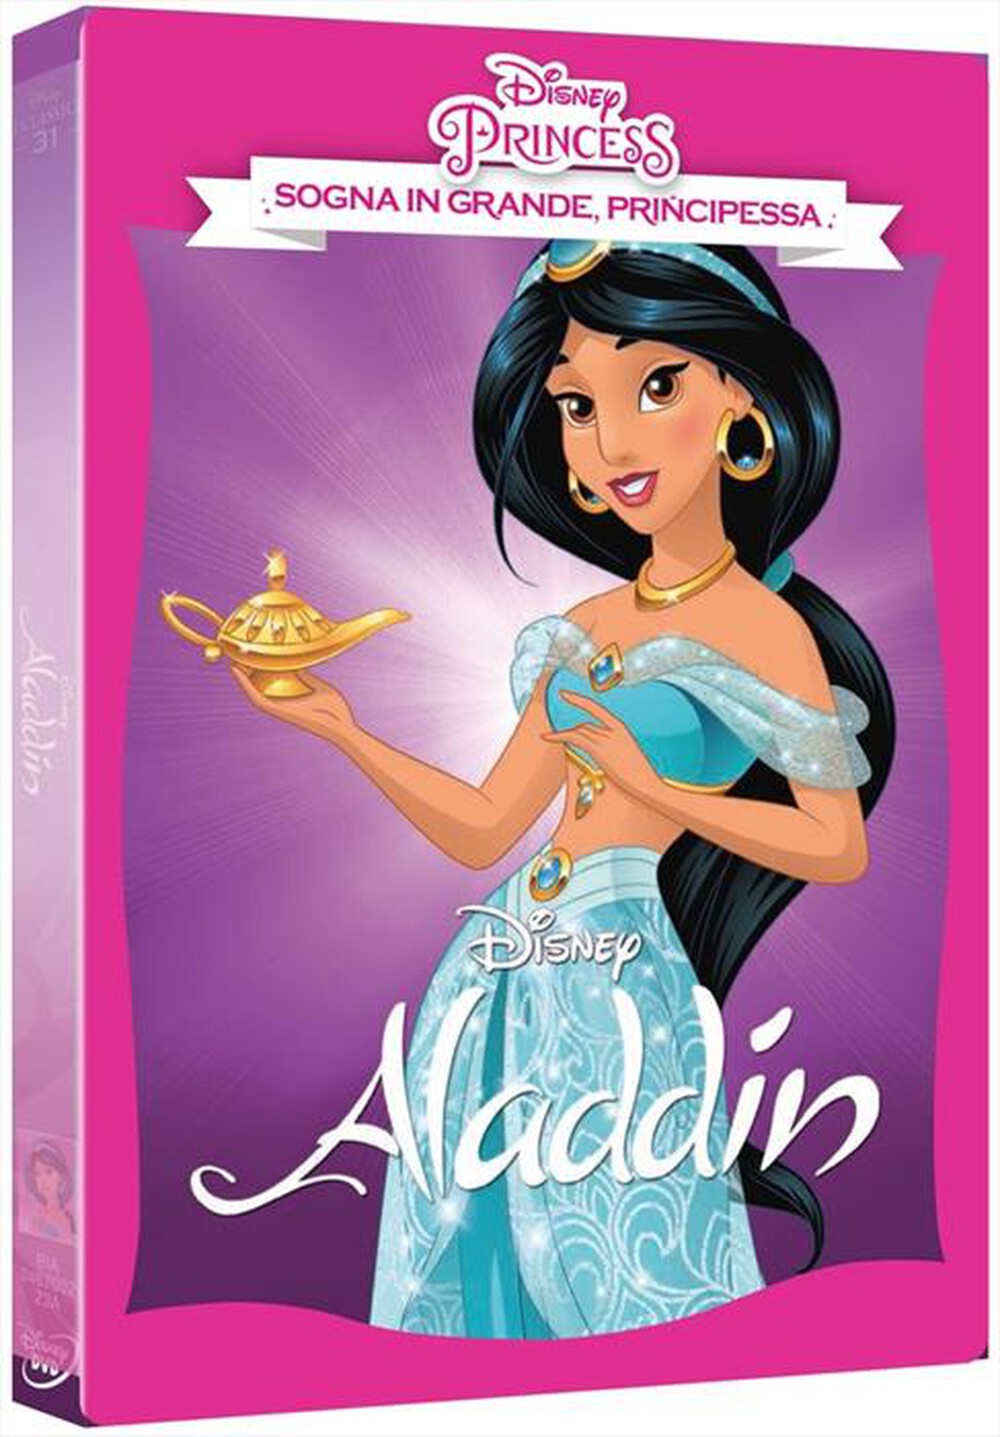 "WALT DISNEY - Aladdin"